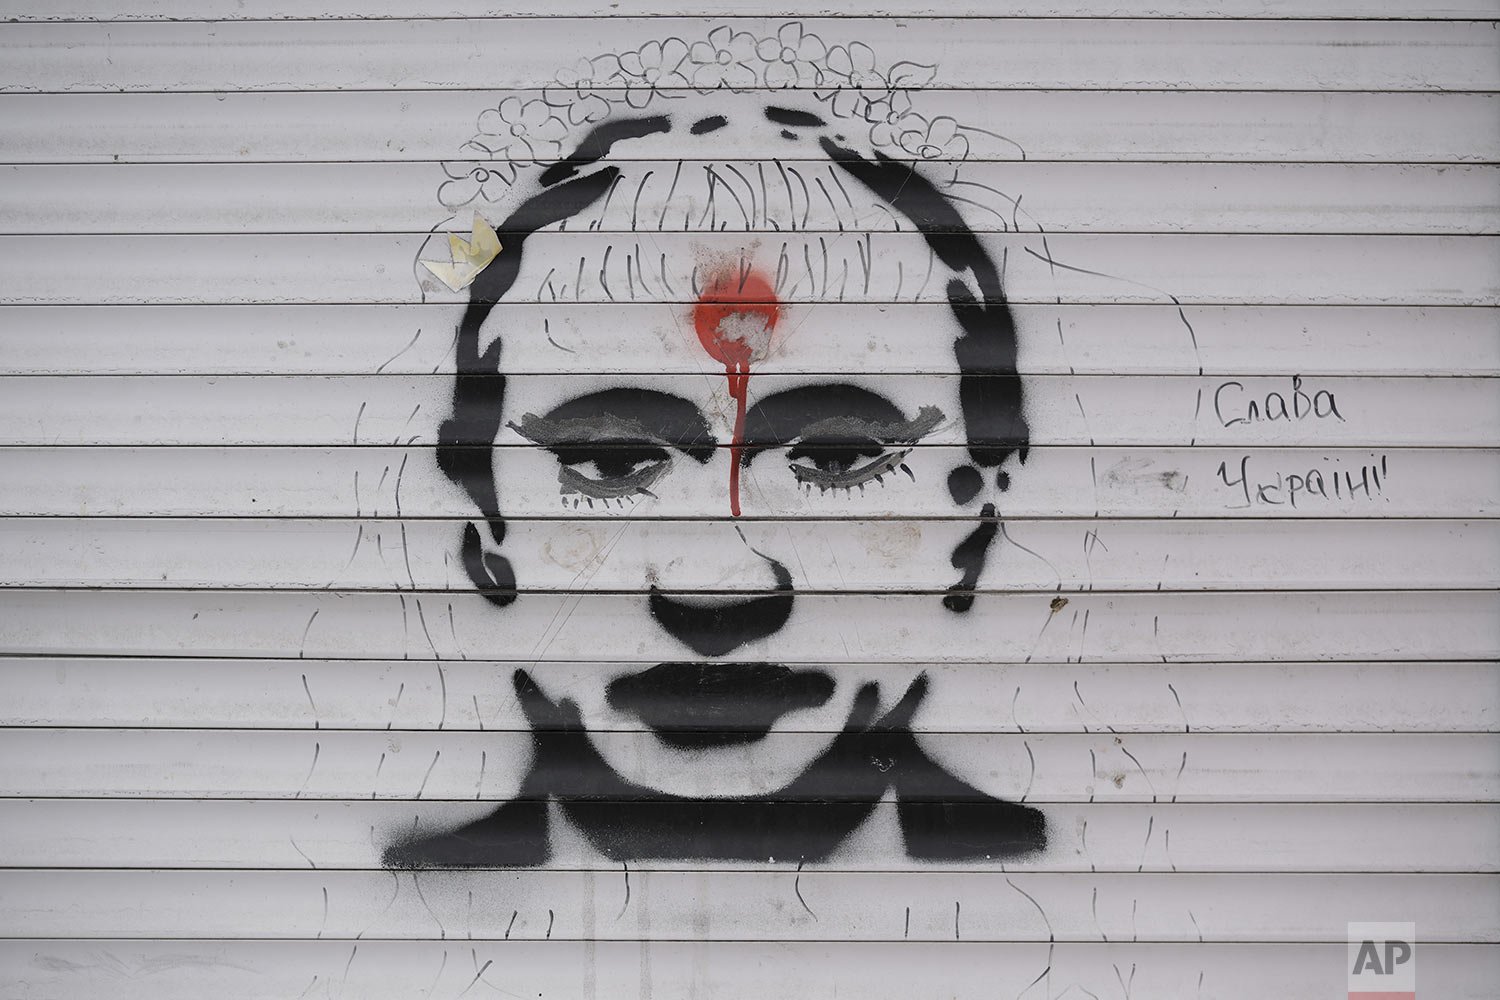  Graffiti depicting Russian President Vladimir Putin and the words “Glory to Ukraine" cover the blinds of a battle-damaged shop in Stoyanka, Ukraine, Sunday, March 27, 2022. (AP Photo/Vadim Ghirda) 